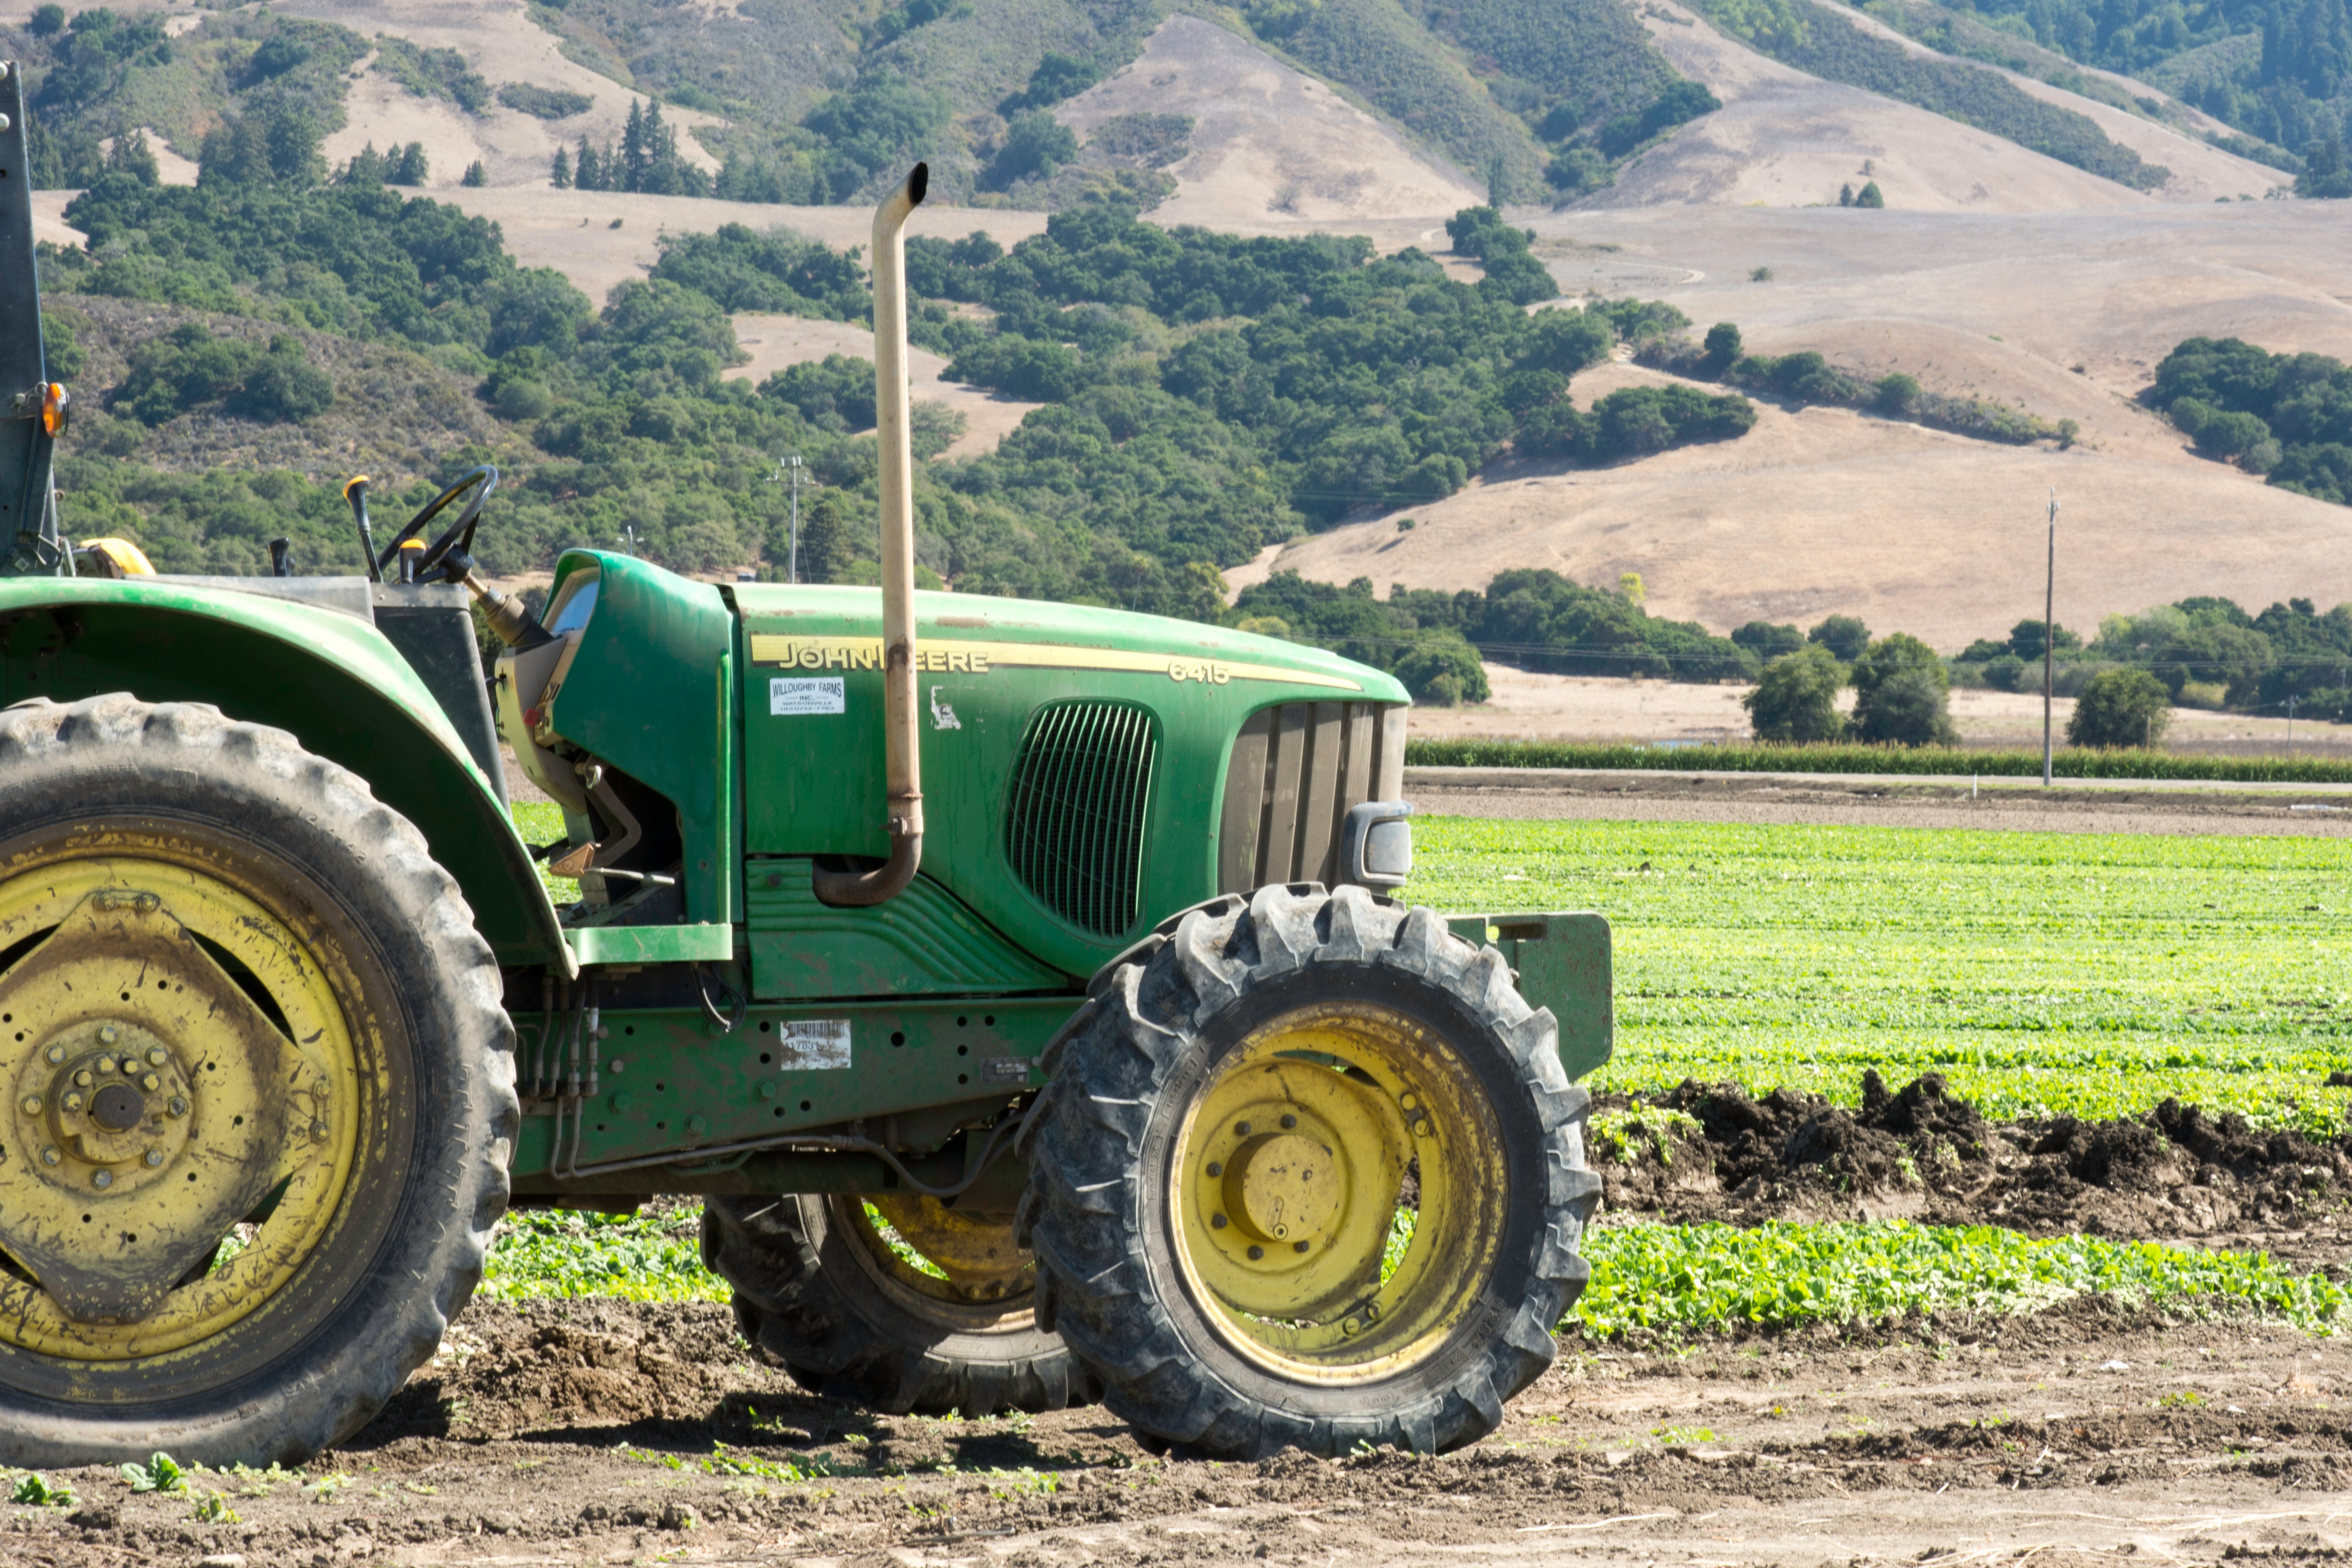 Santa Clara Valley Agricultural Plan